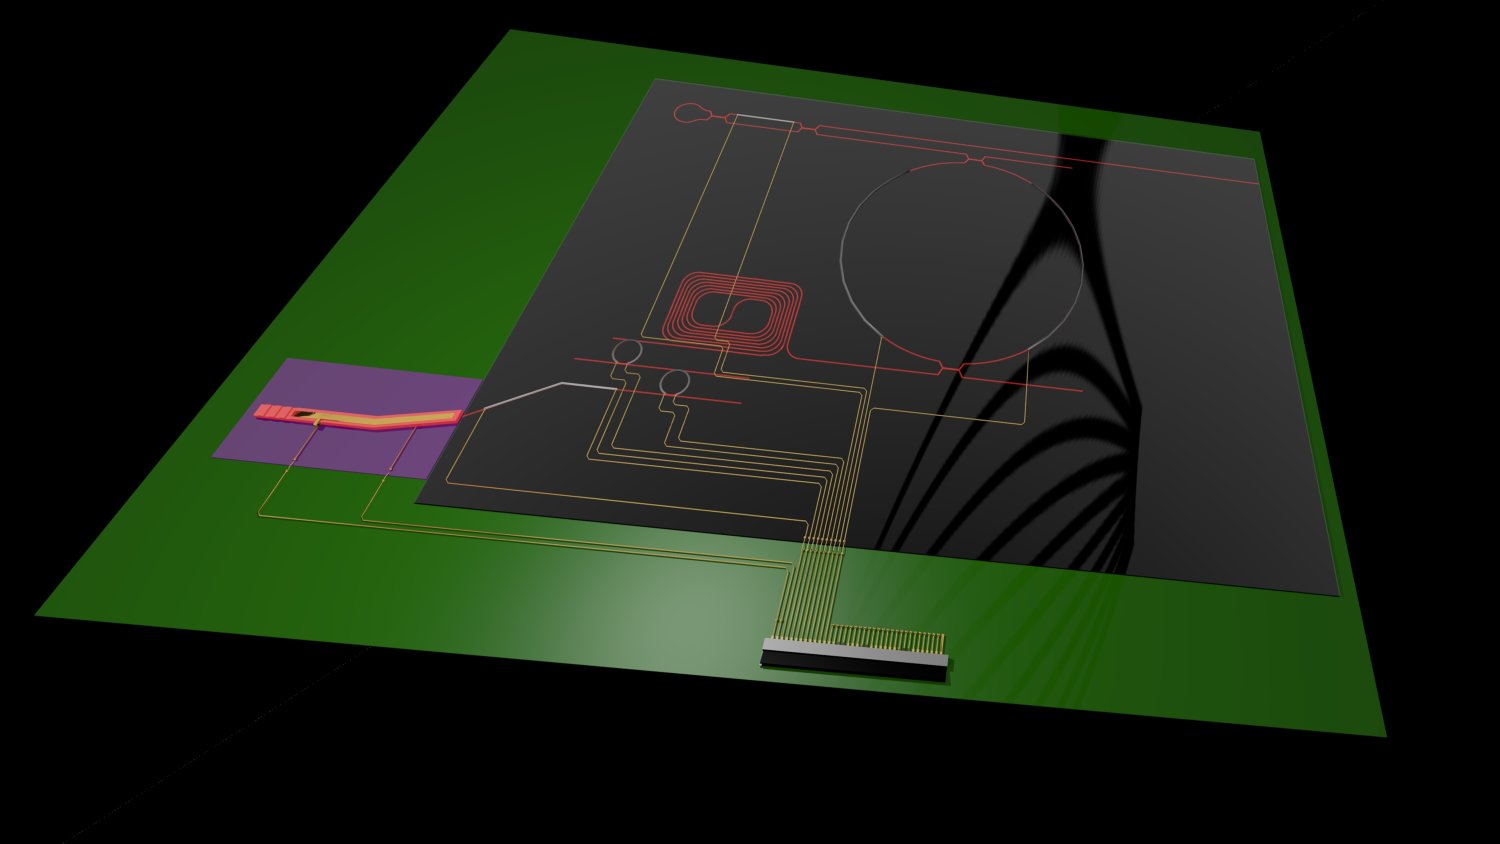 University of Twente develops record laser on chip